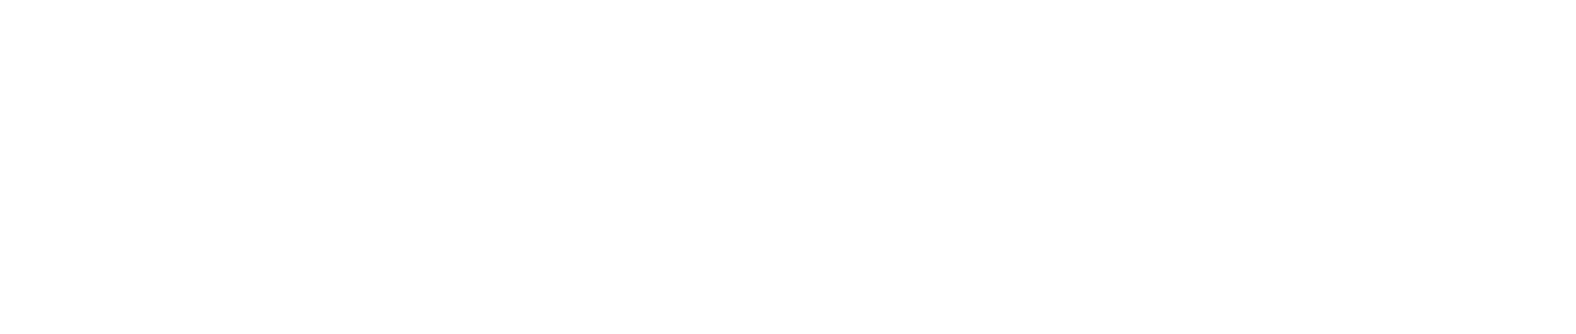 Meesho logo large for dark backgrounds (transparent PNG)